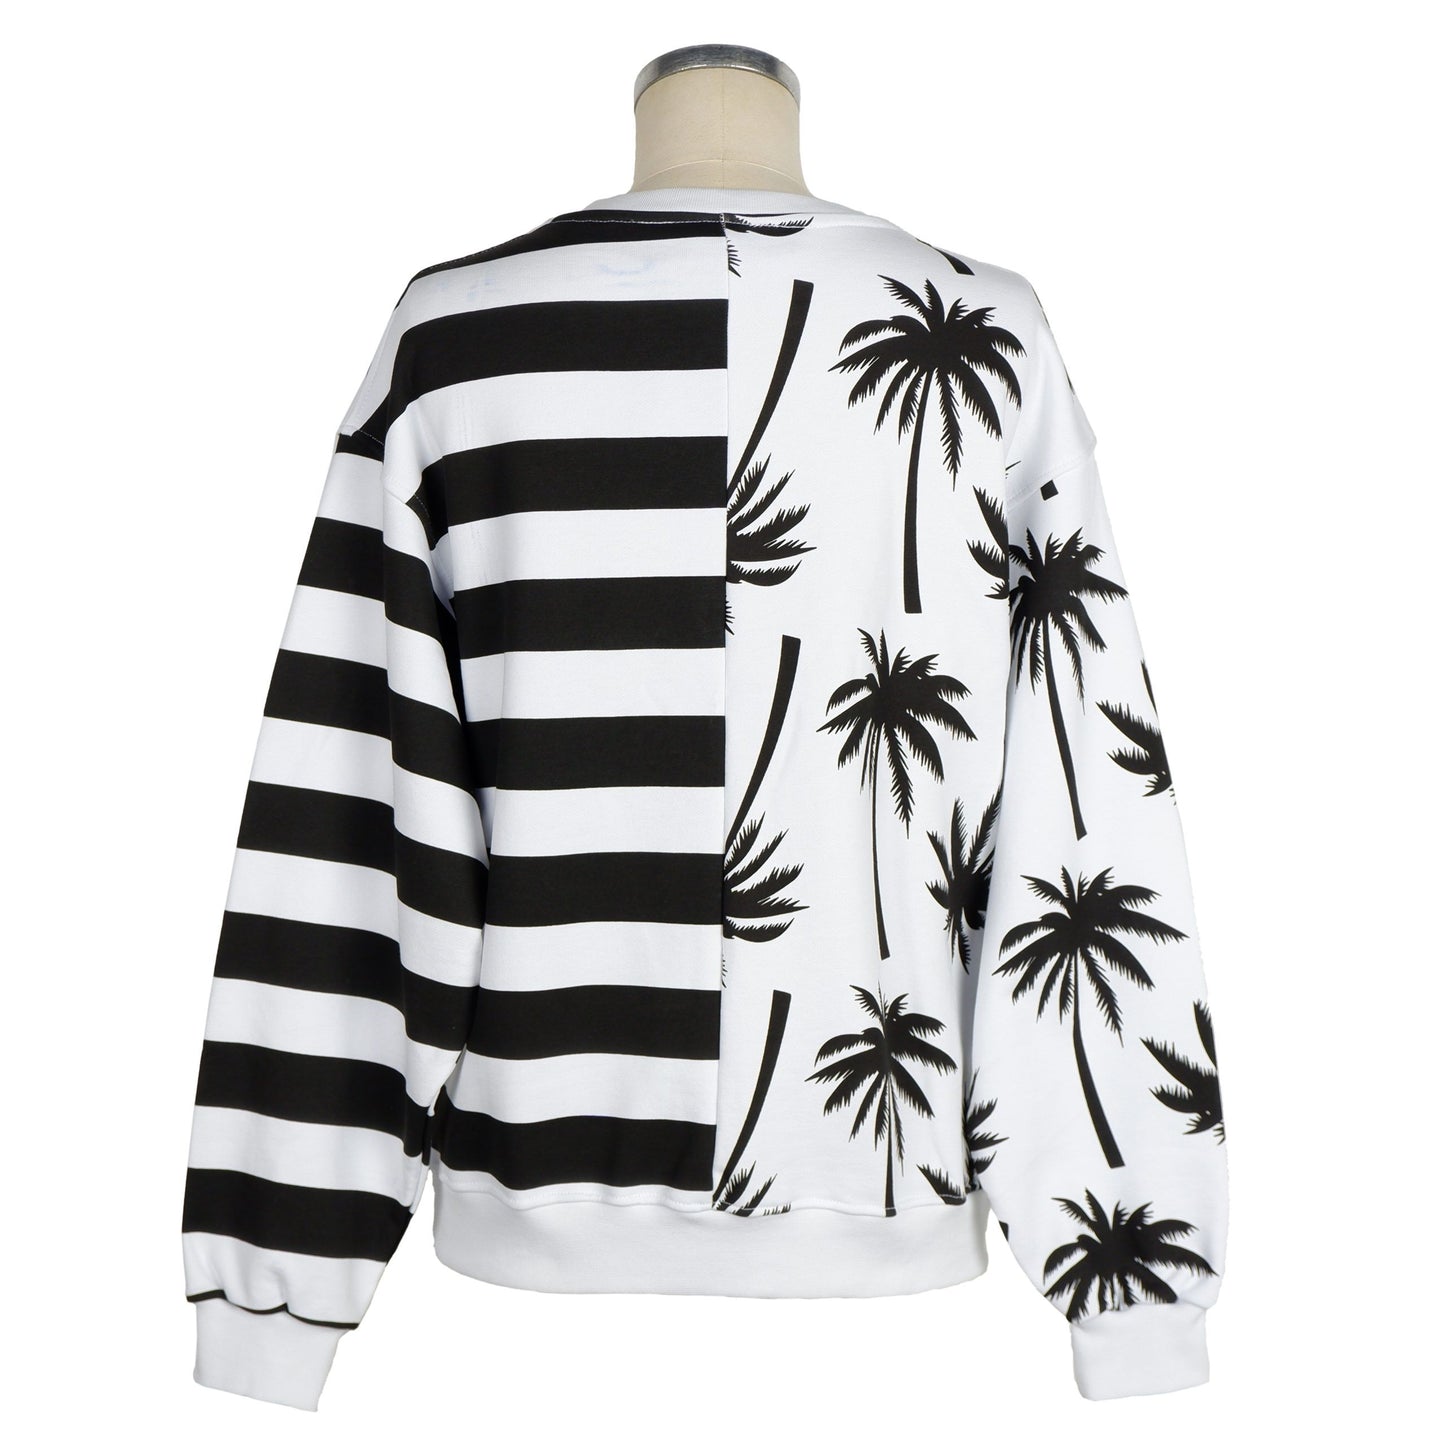 Chic Monochrome Stripe Palm Print Sweater